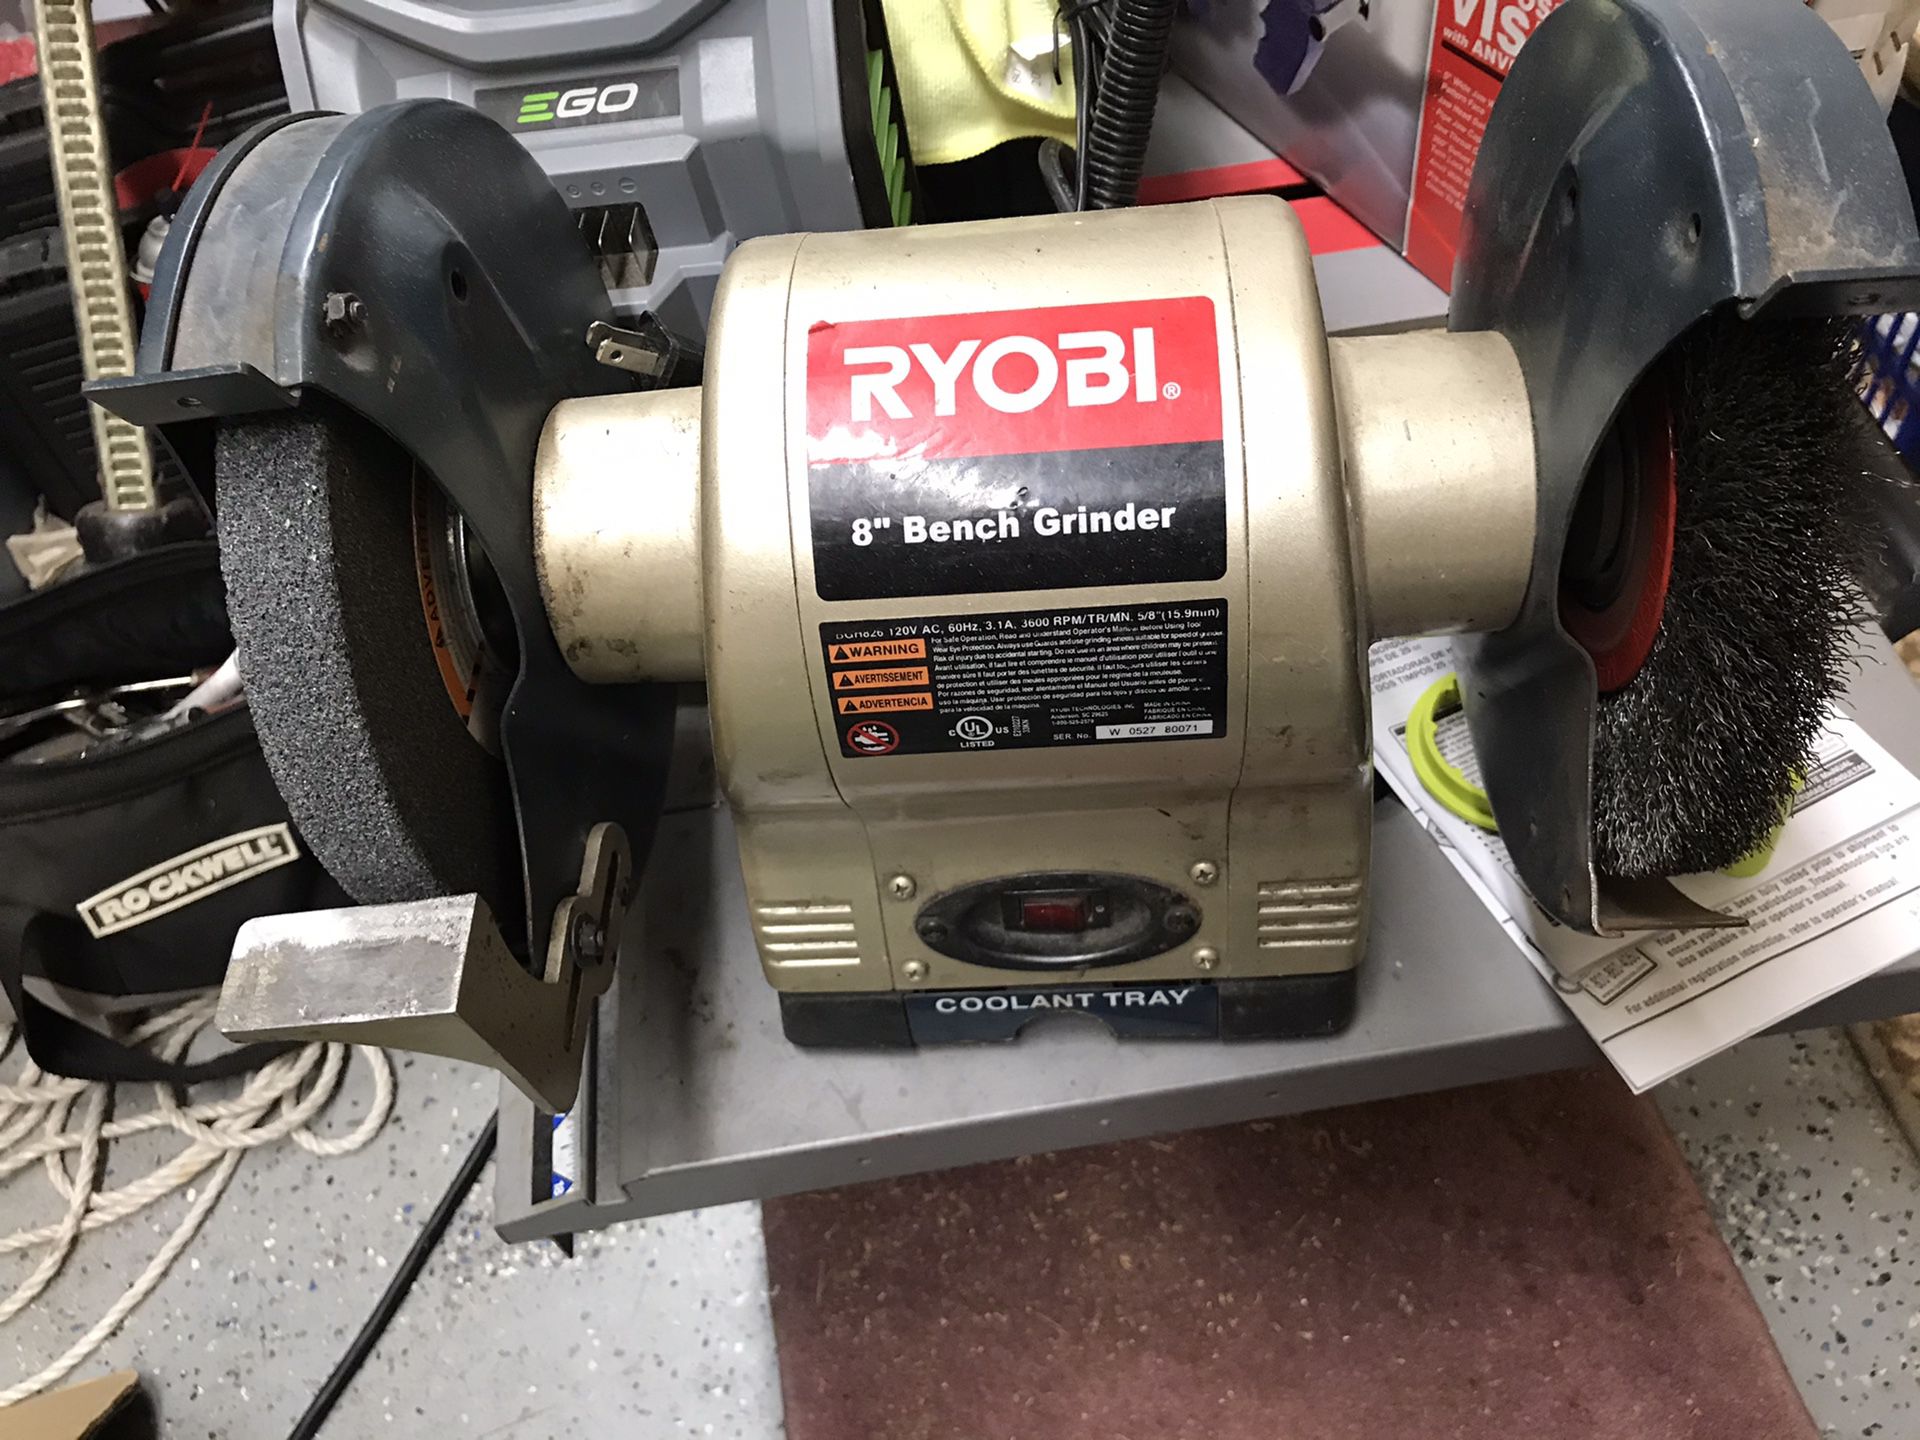 Ryobi 8” bench grinder